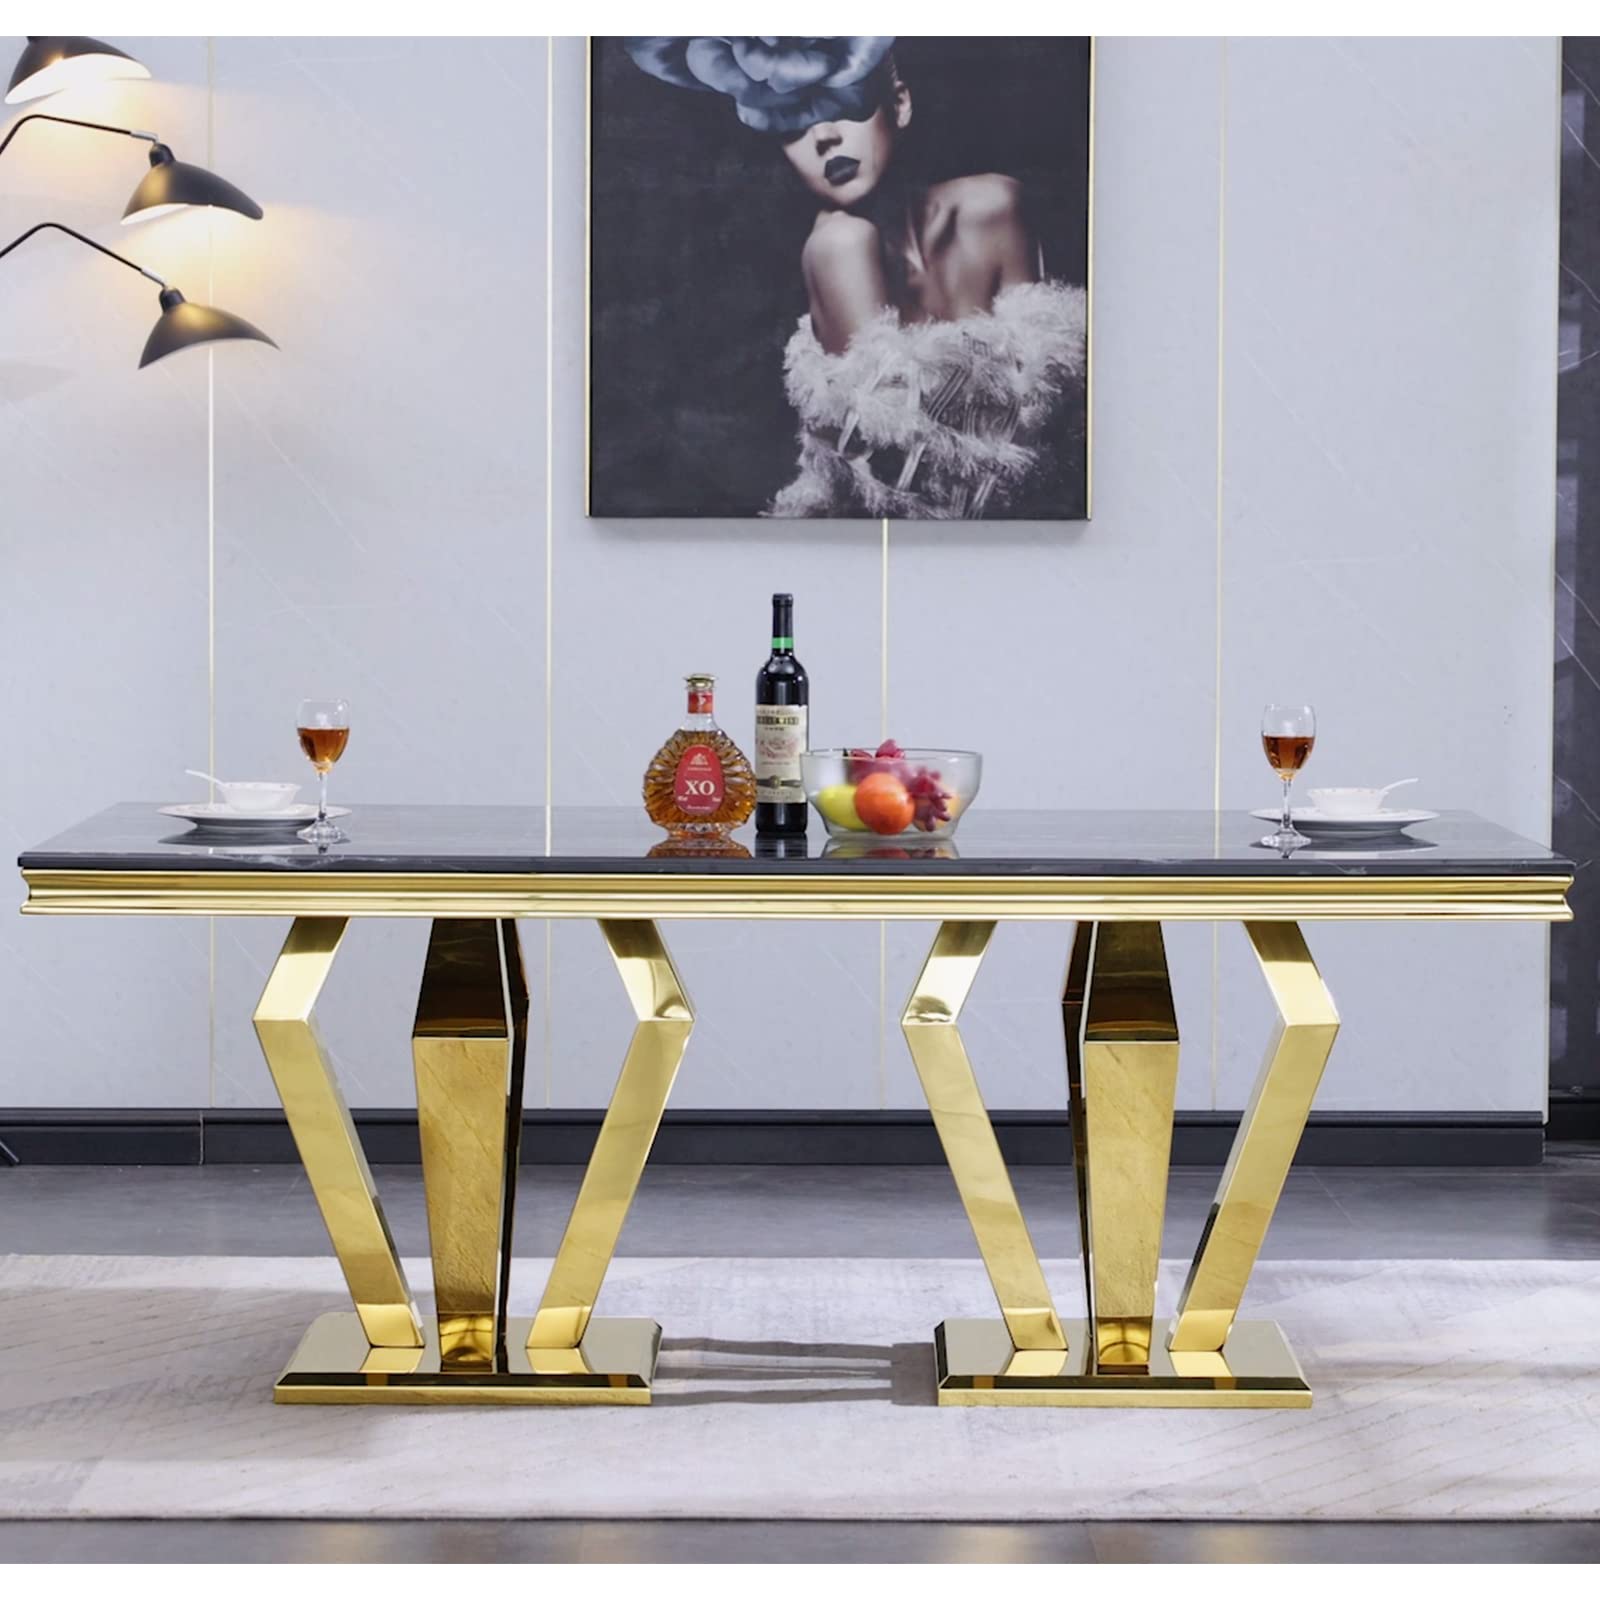 684-Set | AUZ Black and Gold Dining room Sets for 6